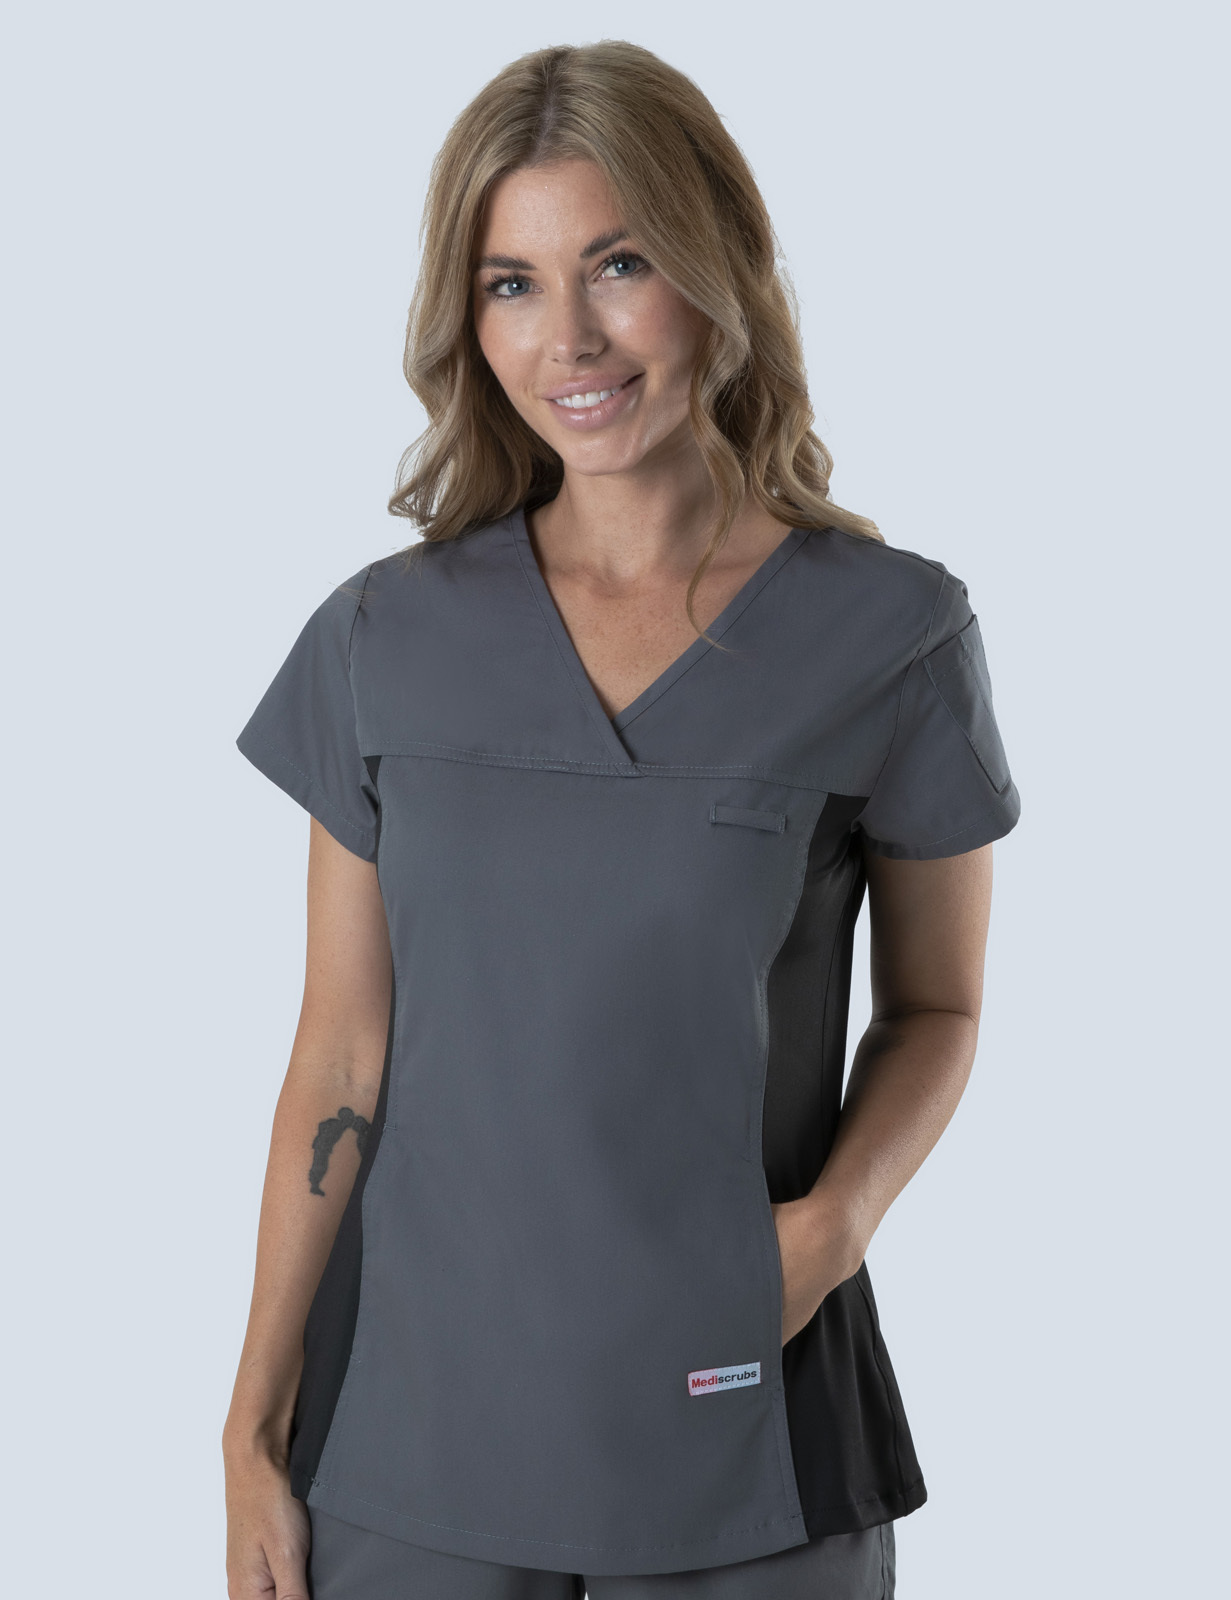 Ashmore Retreat Registered Nurse Top Only Bundle (Women's Fit Spandex in Steel Grey incl Logo) 